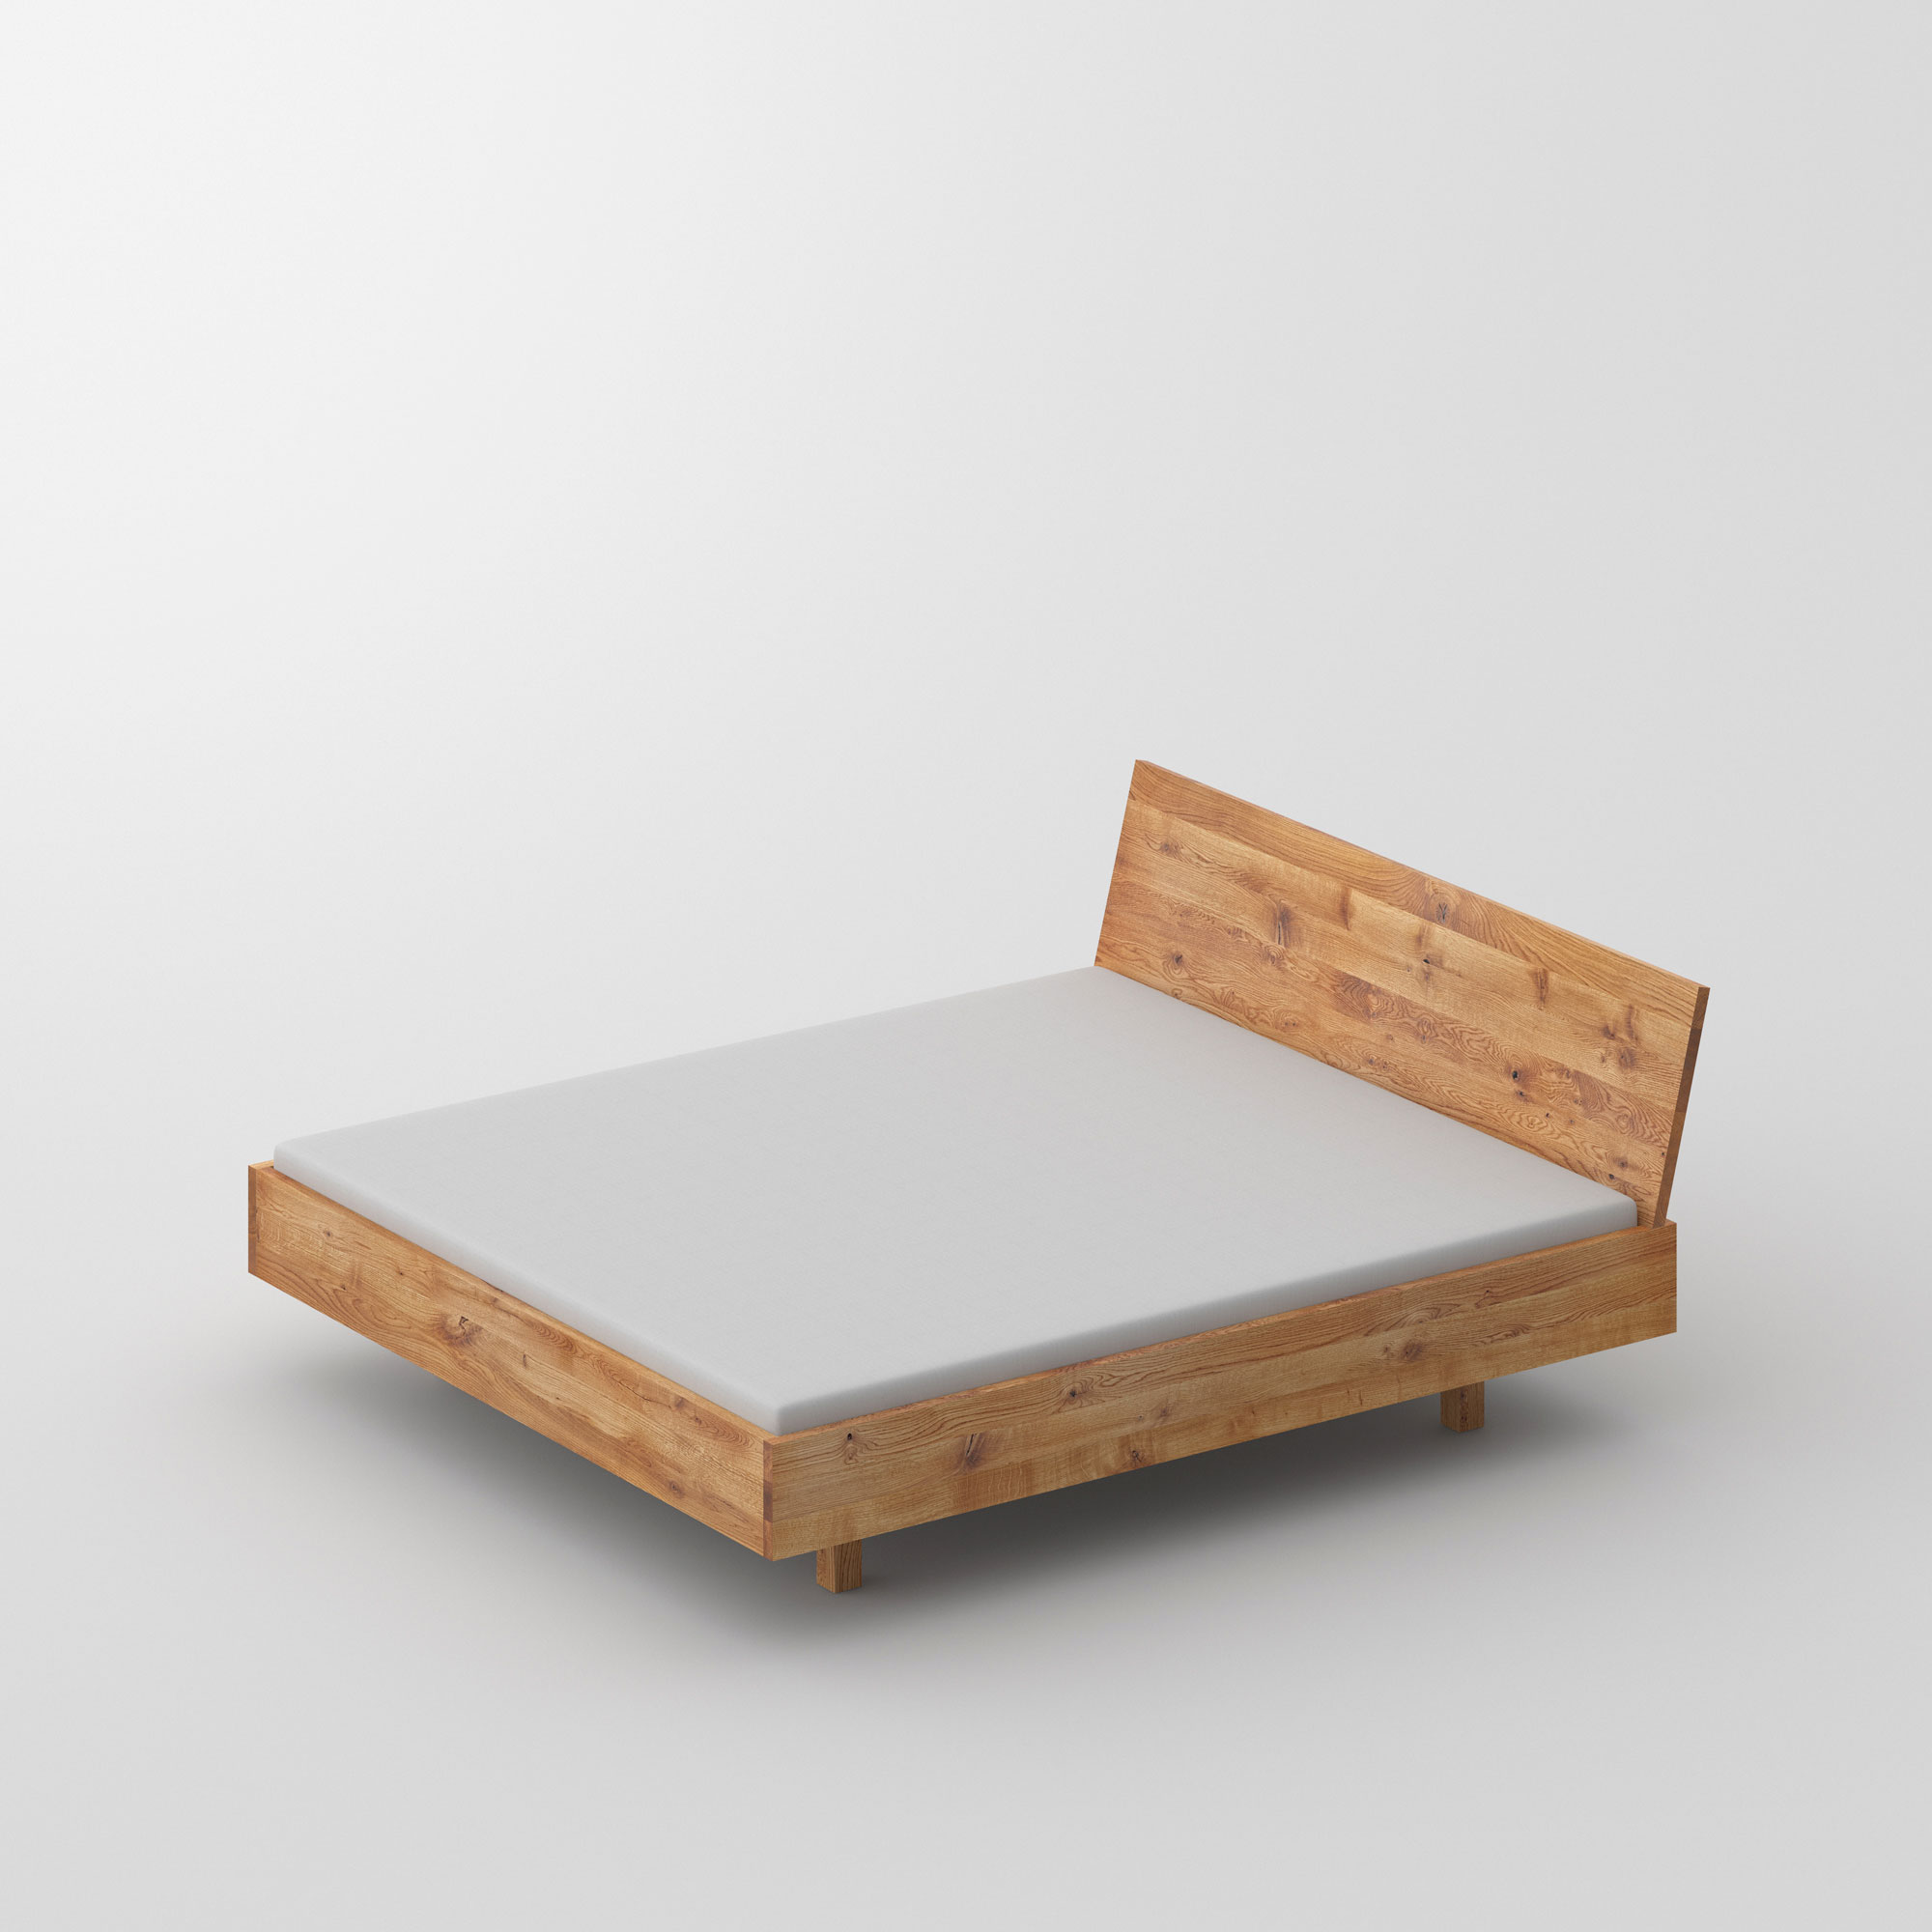 Design Bed QUADRA cam1 custom made in solid wood by vitamin design